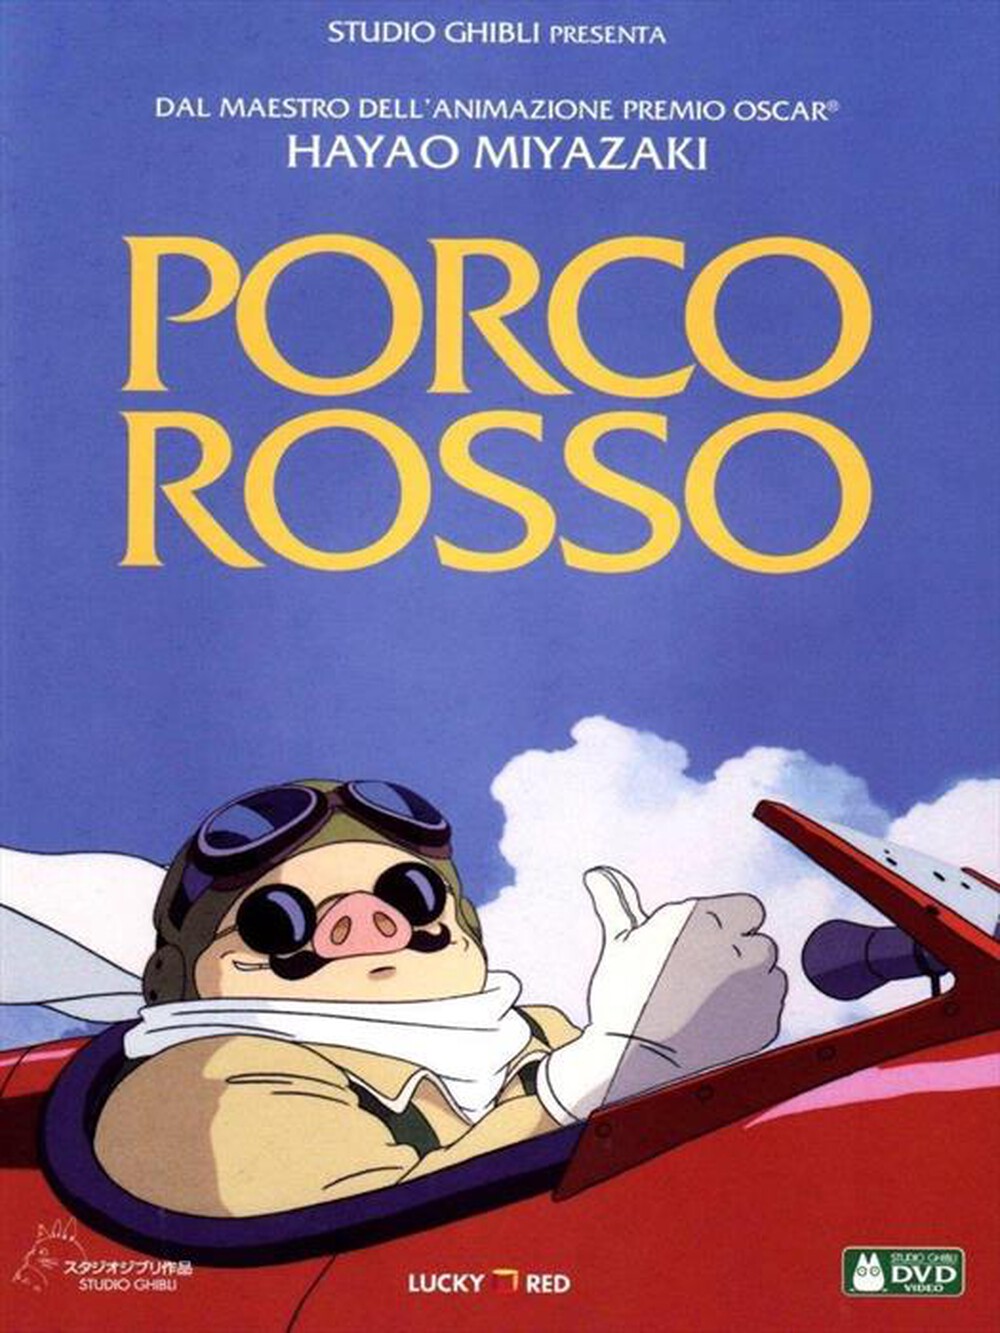 "WARNER HOME VIDEO - Porco Rosso"